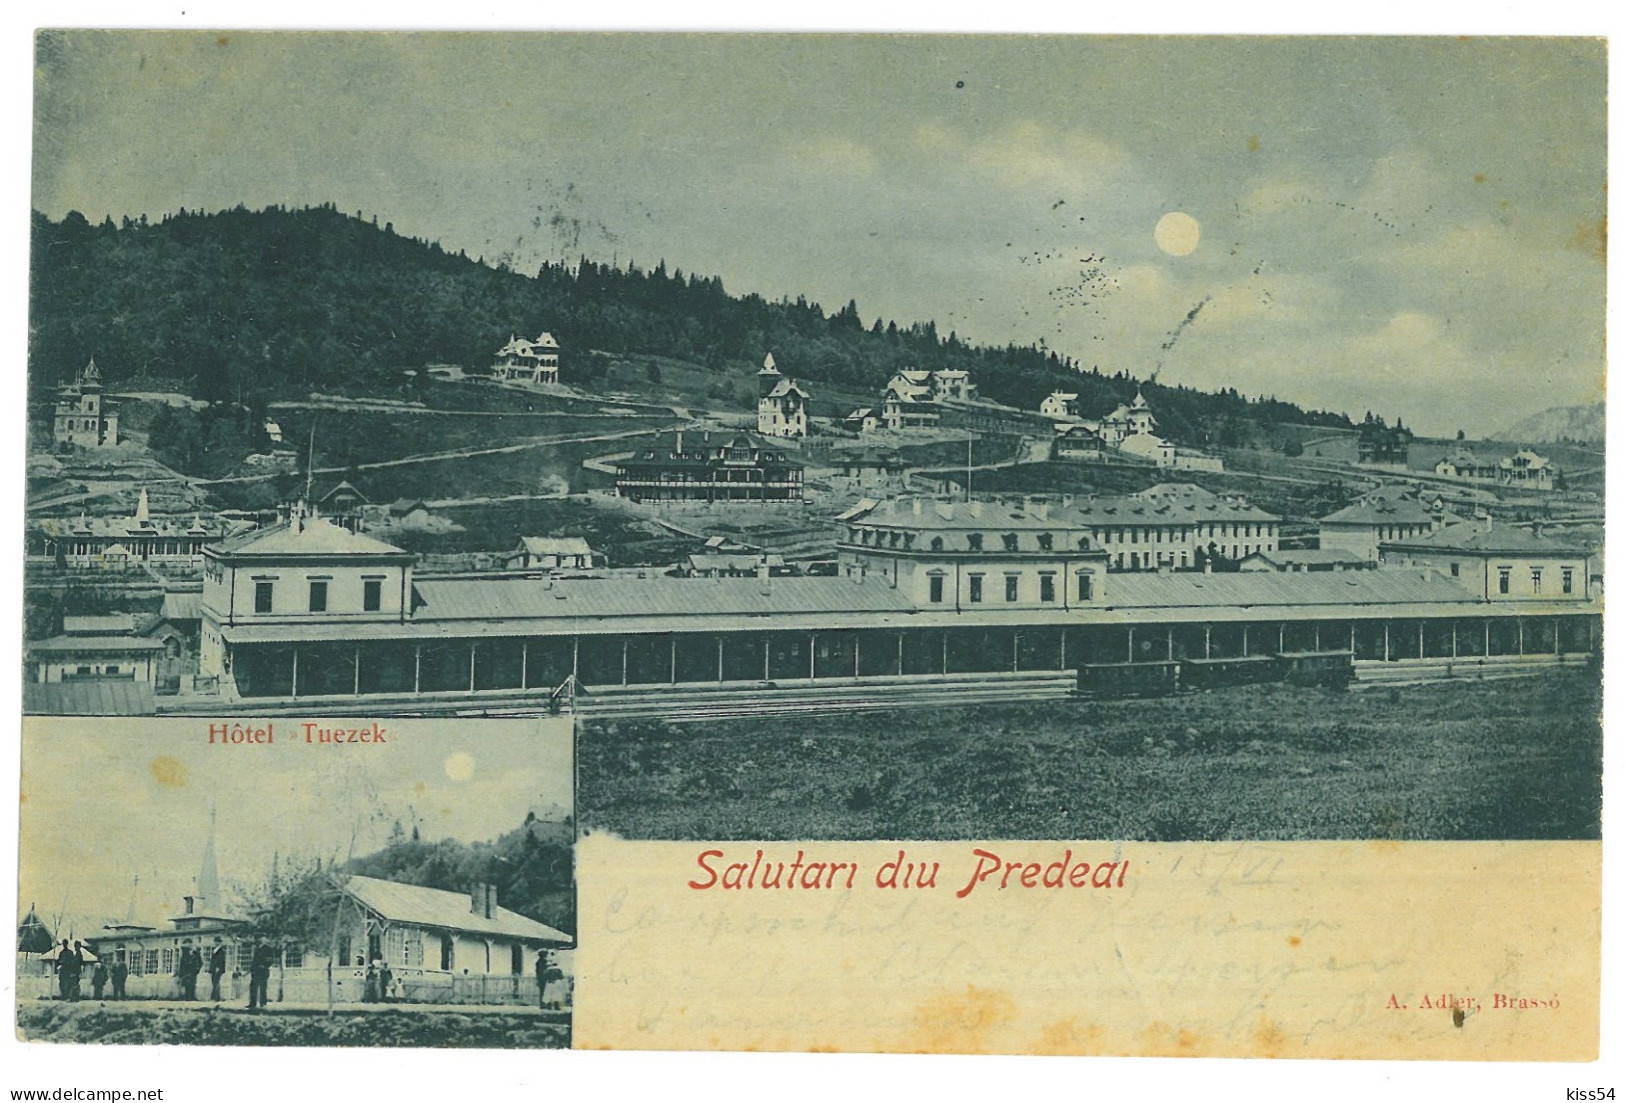 RO 77 - 23756 PREDEAL, Brasov, Railway Station, Litho, Romania - Old Postcard - Used - 1899 - Romania